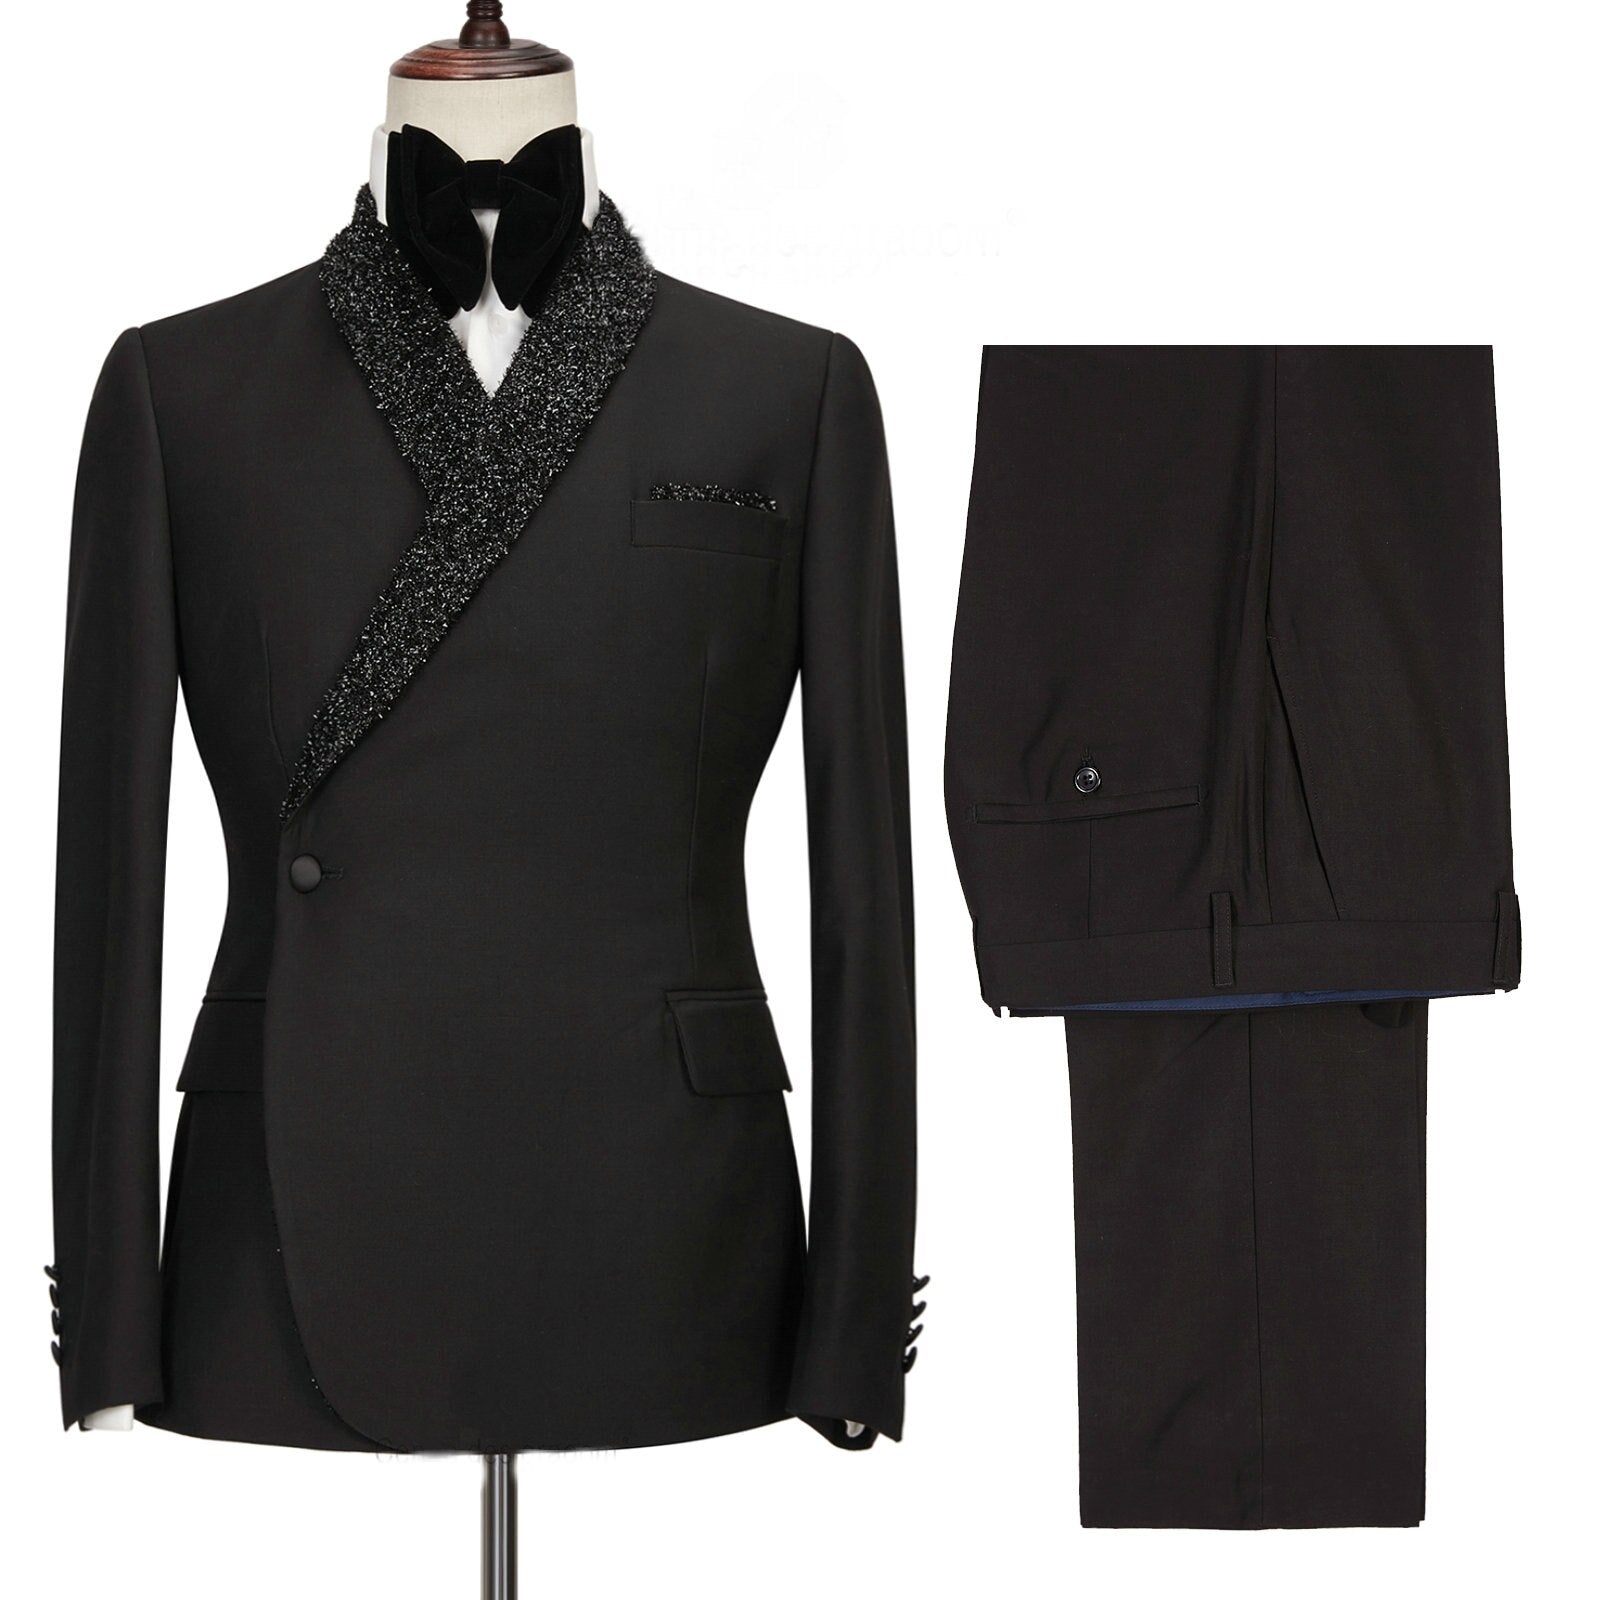 Black Formal Suit Men Double Breasted Slim Fit Design Custom Made 2 Pieces Wedding Suit For Men Groom Suits Tuxedo